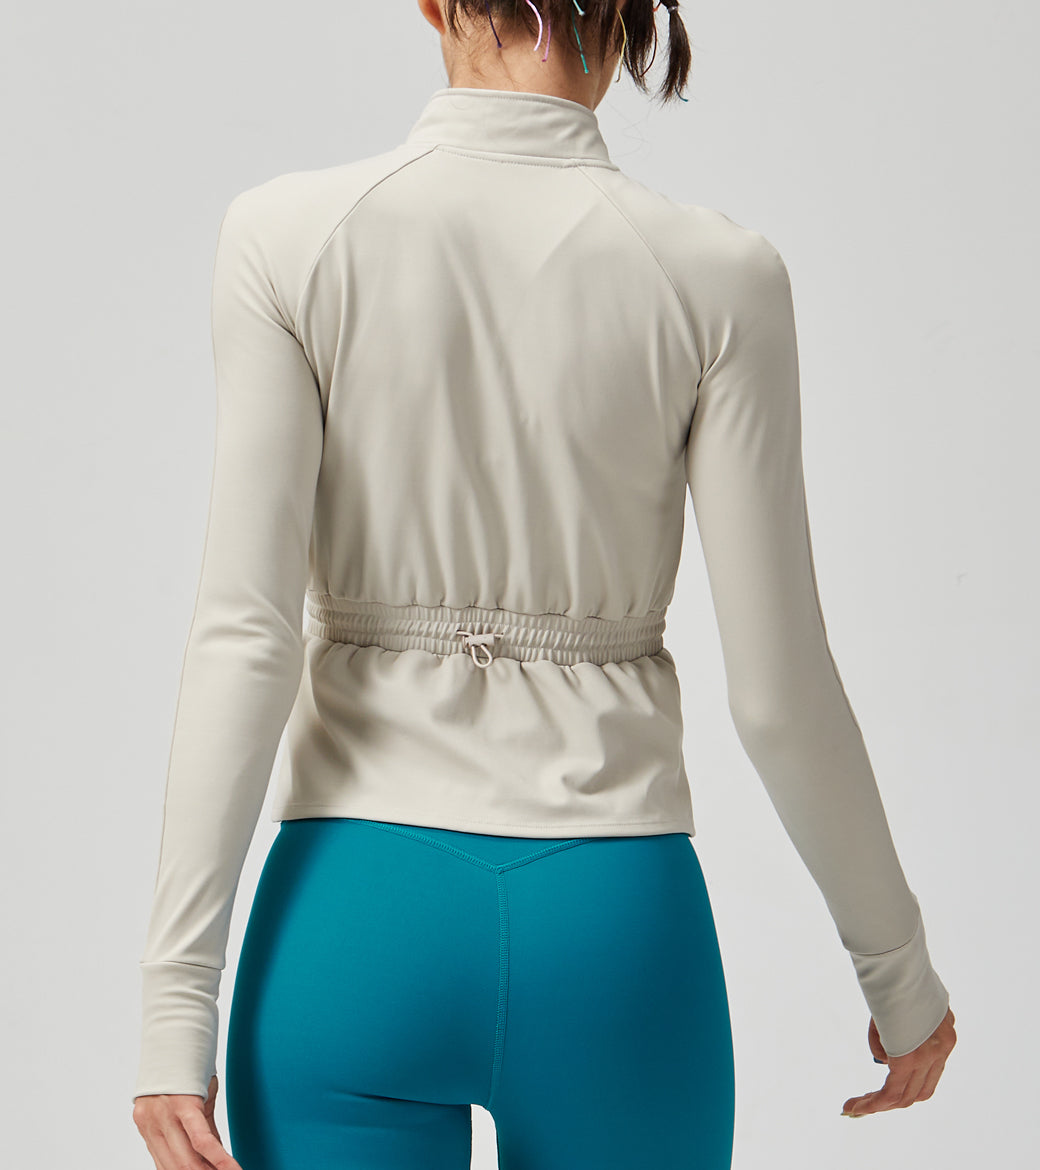 LOVESOFT Women's Light Grey Drawstring Adjustment Thermal Fitness Jacket